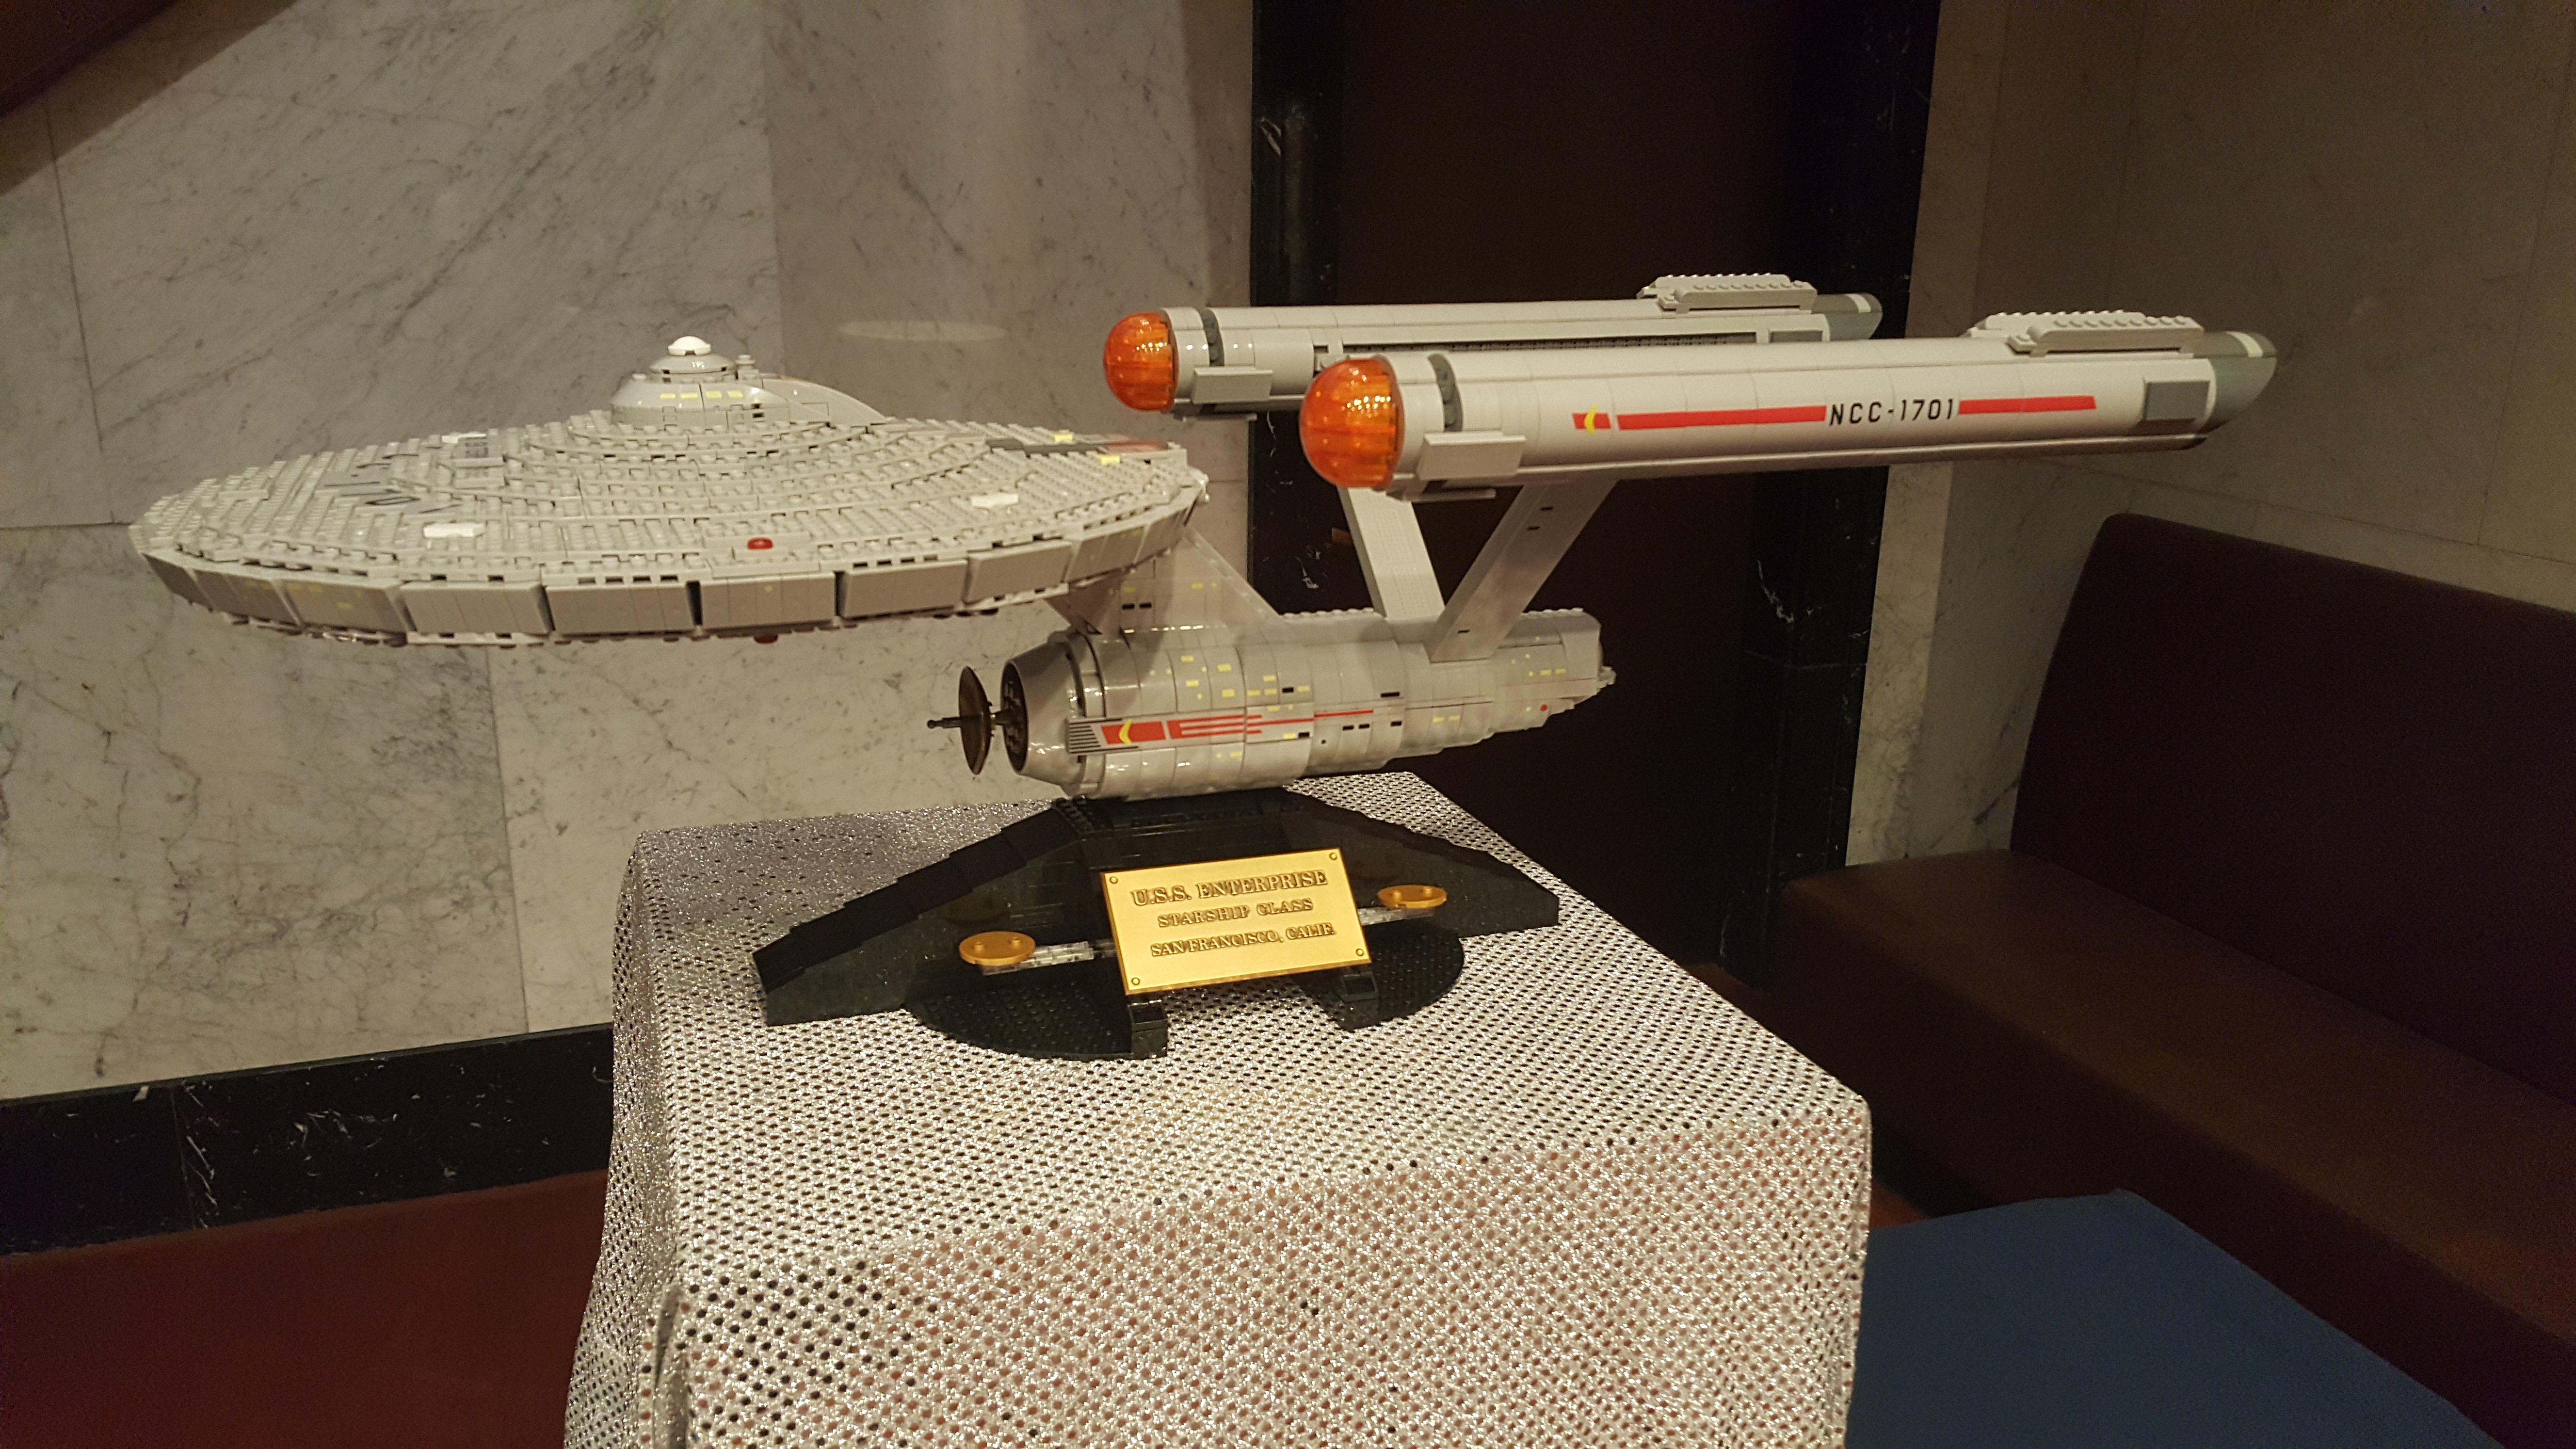 Starship Enterprise Photo-Op